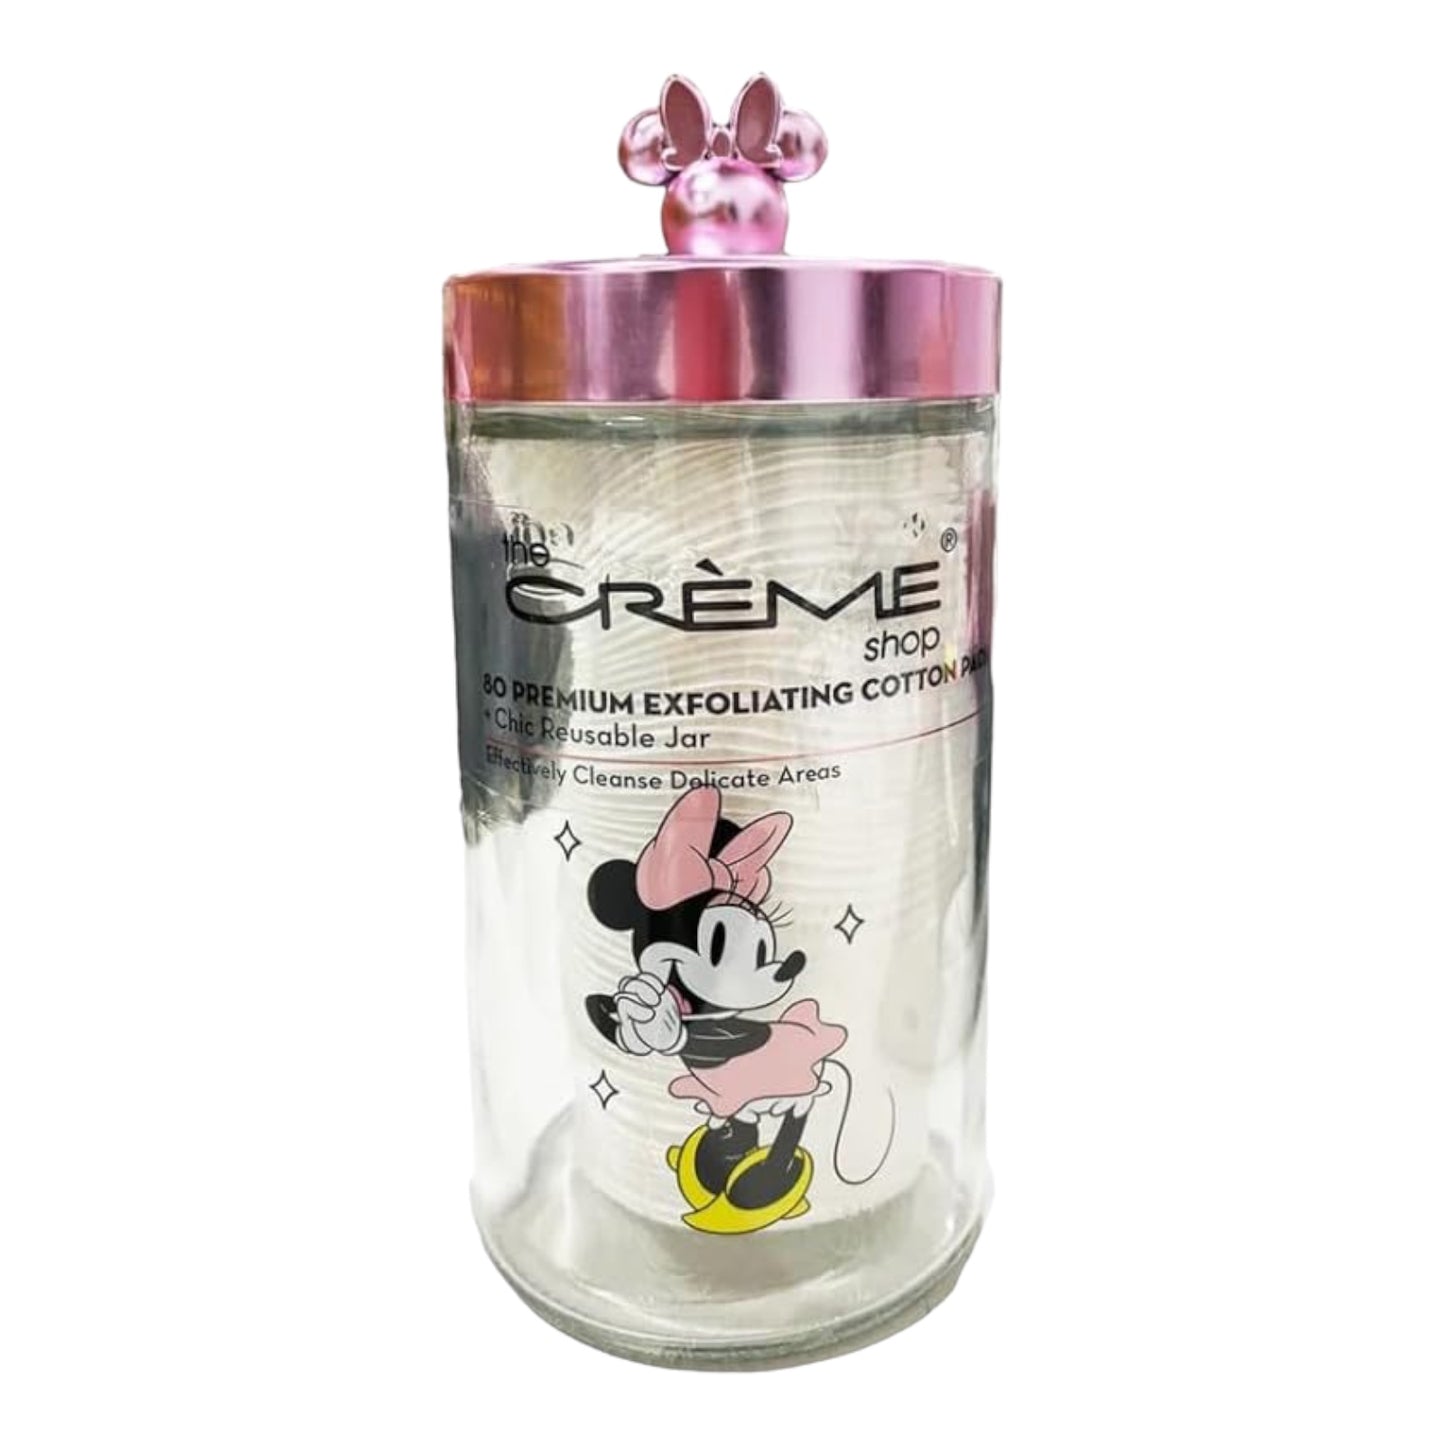 Minnie Mouse Reusable Glass Jar with Premium Exfoliating Cotton Pads - The Creme Shop x Disney